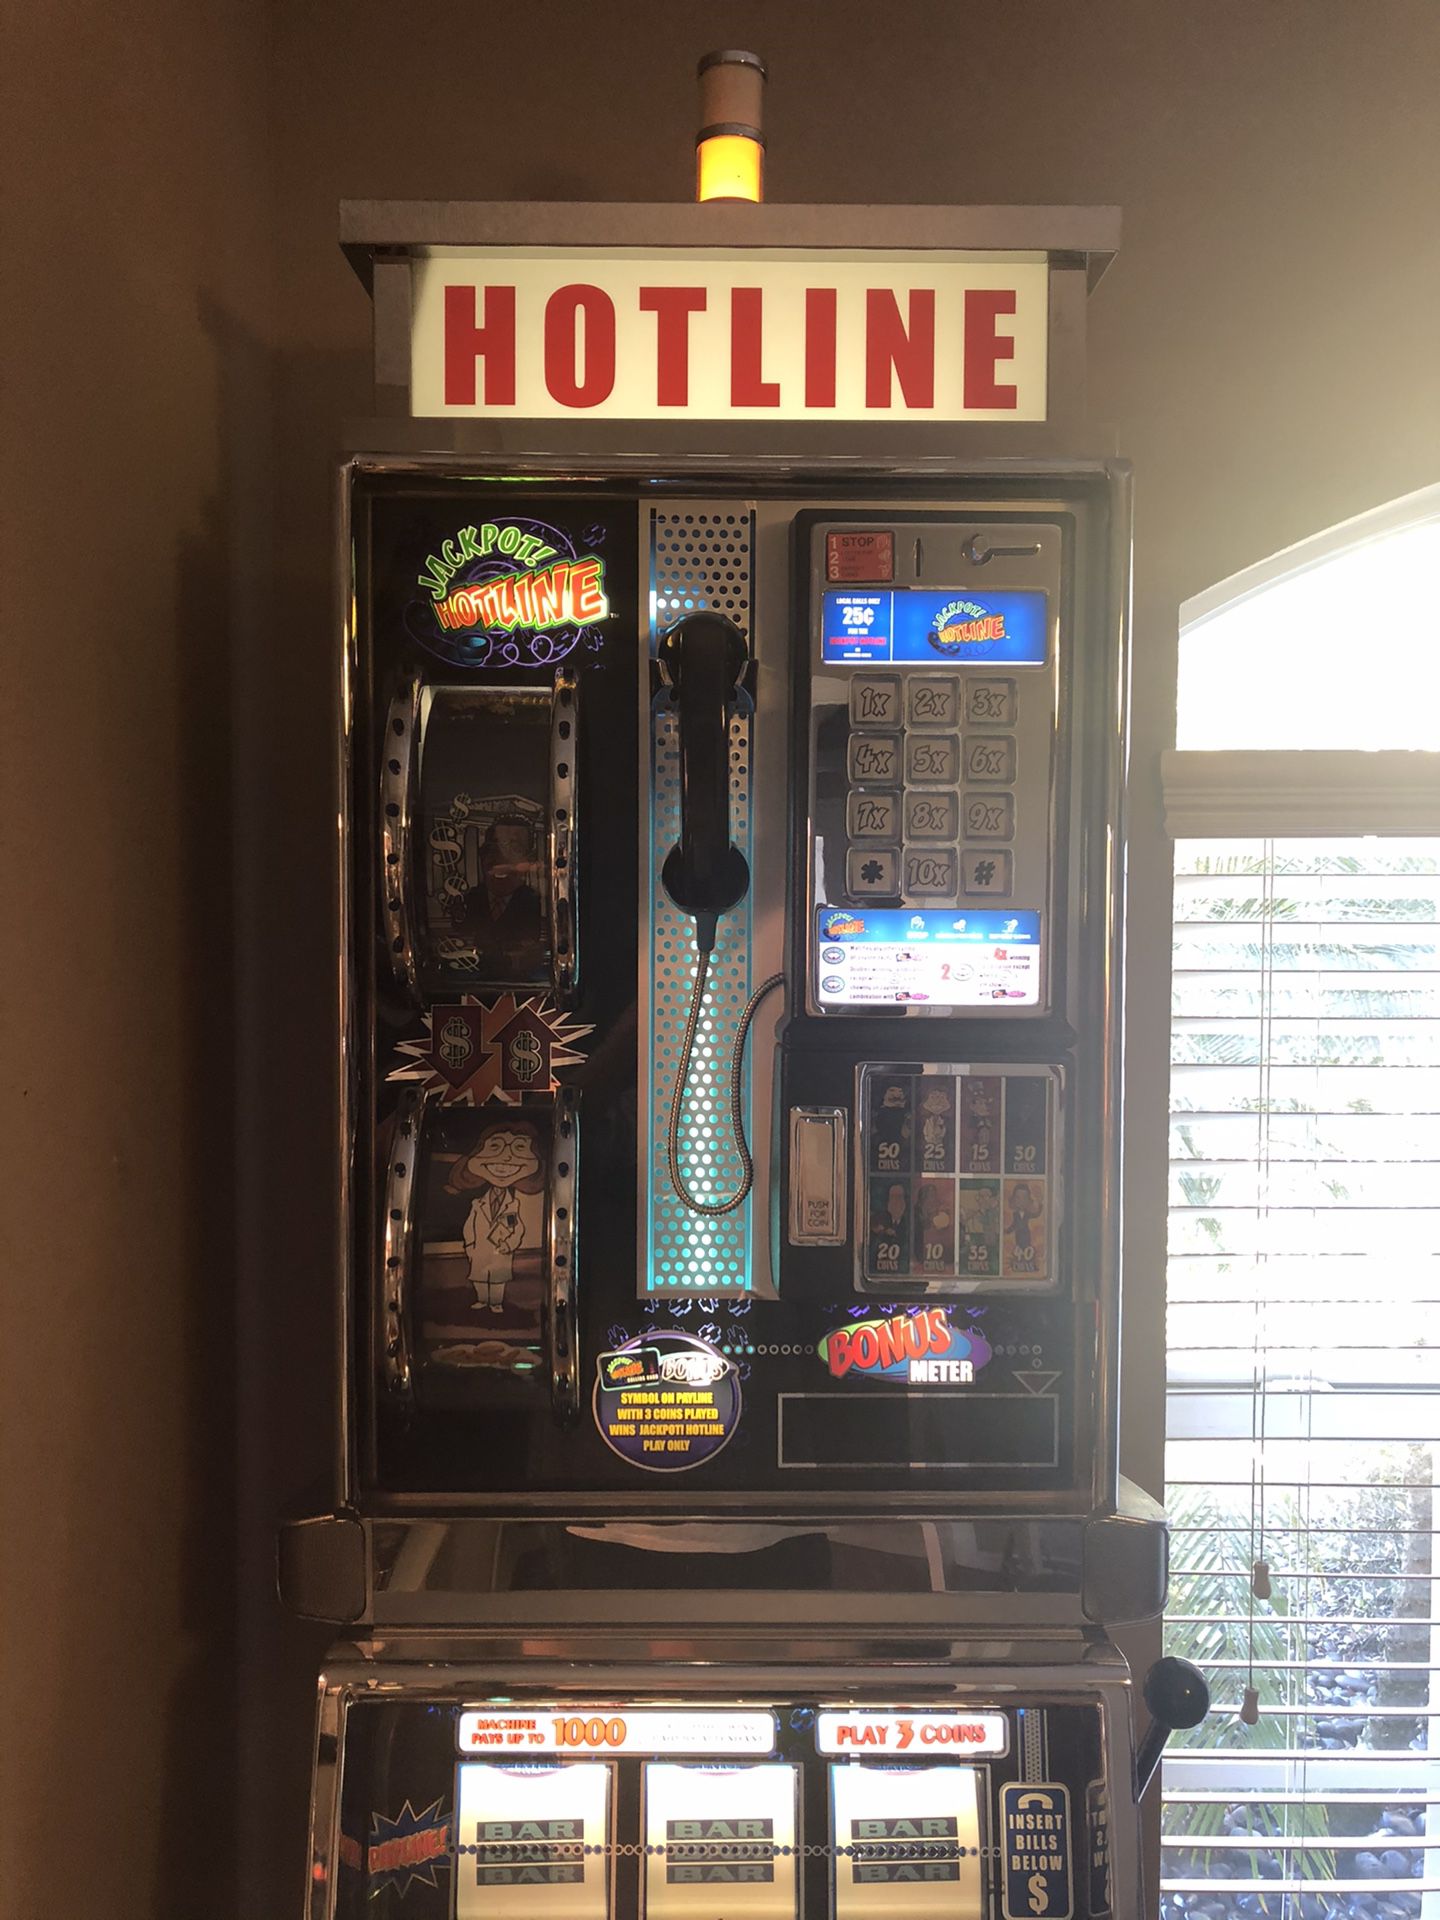 IGT “Hotline” Slot Machine.  